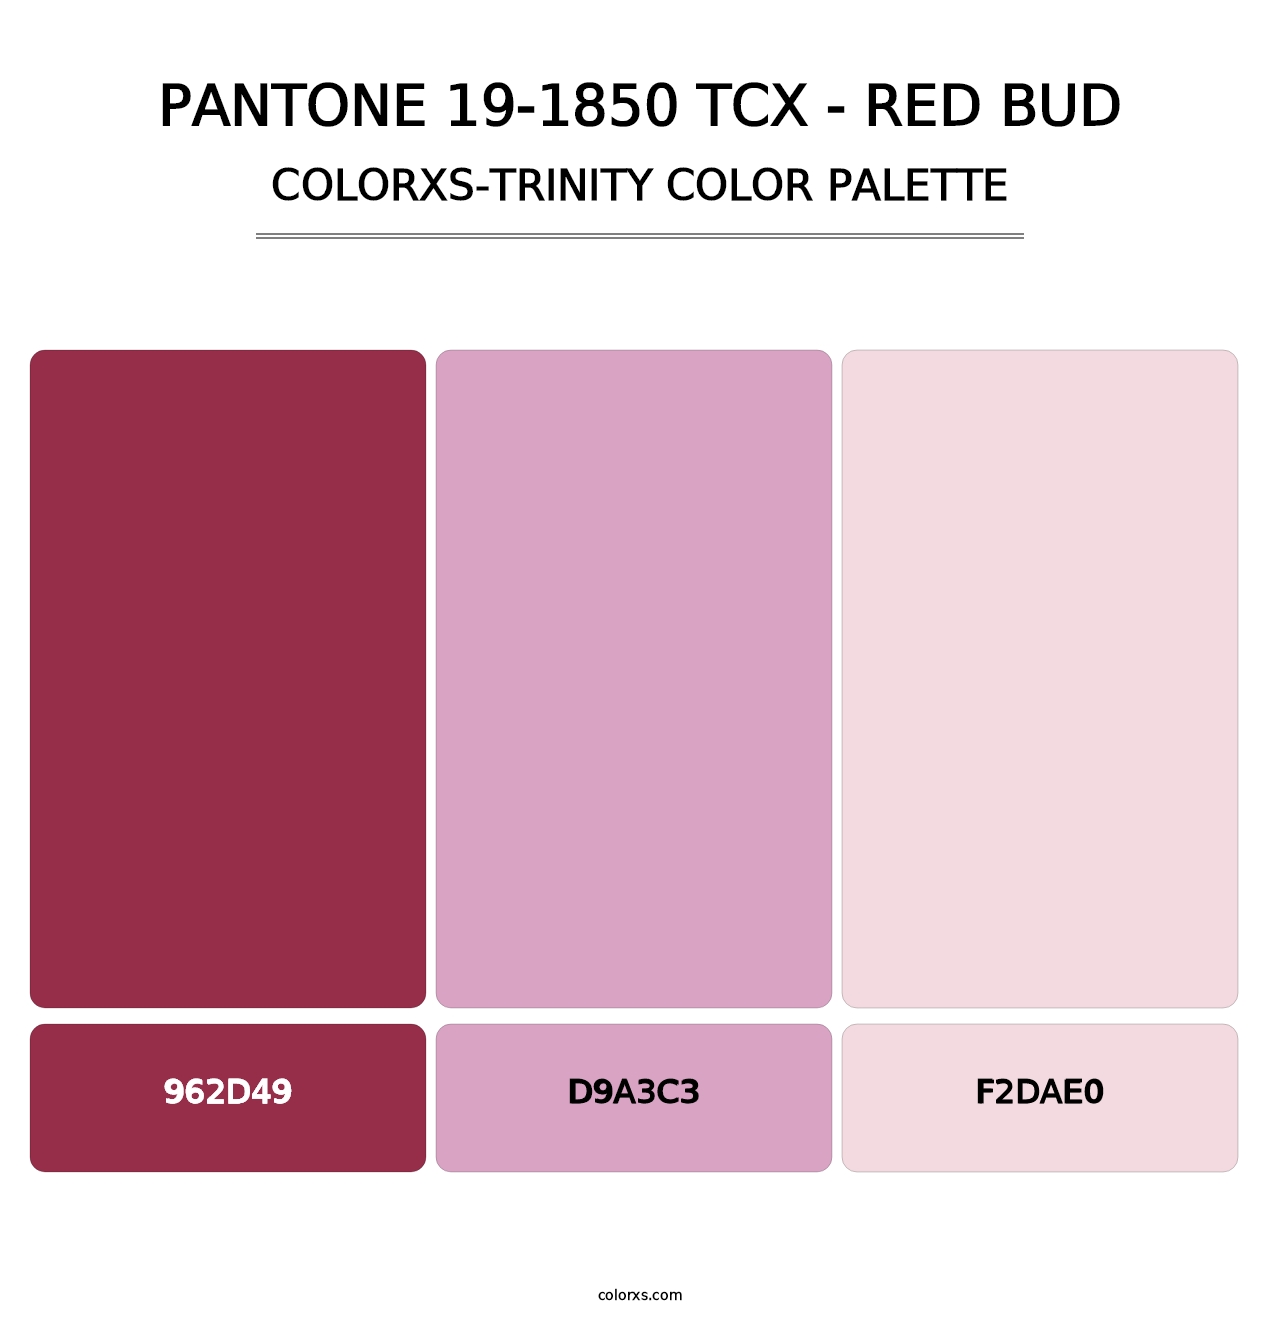 PANTONE 19-1850 TCX - Red Bud - Colorxs Trinity Palette